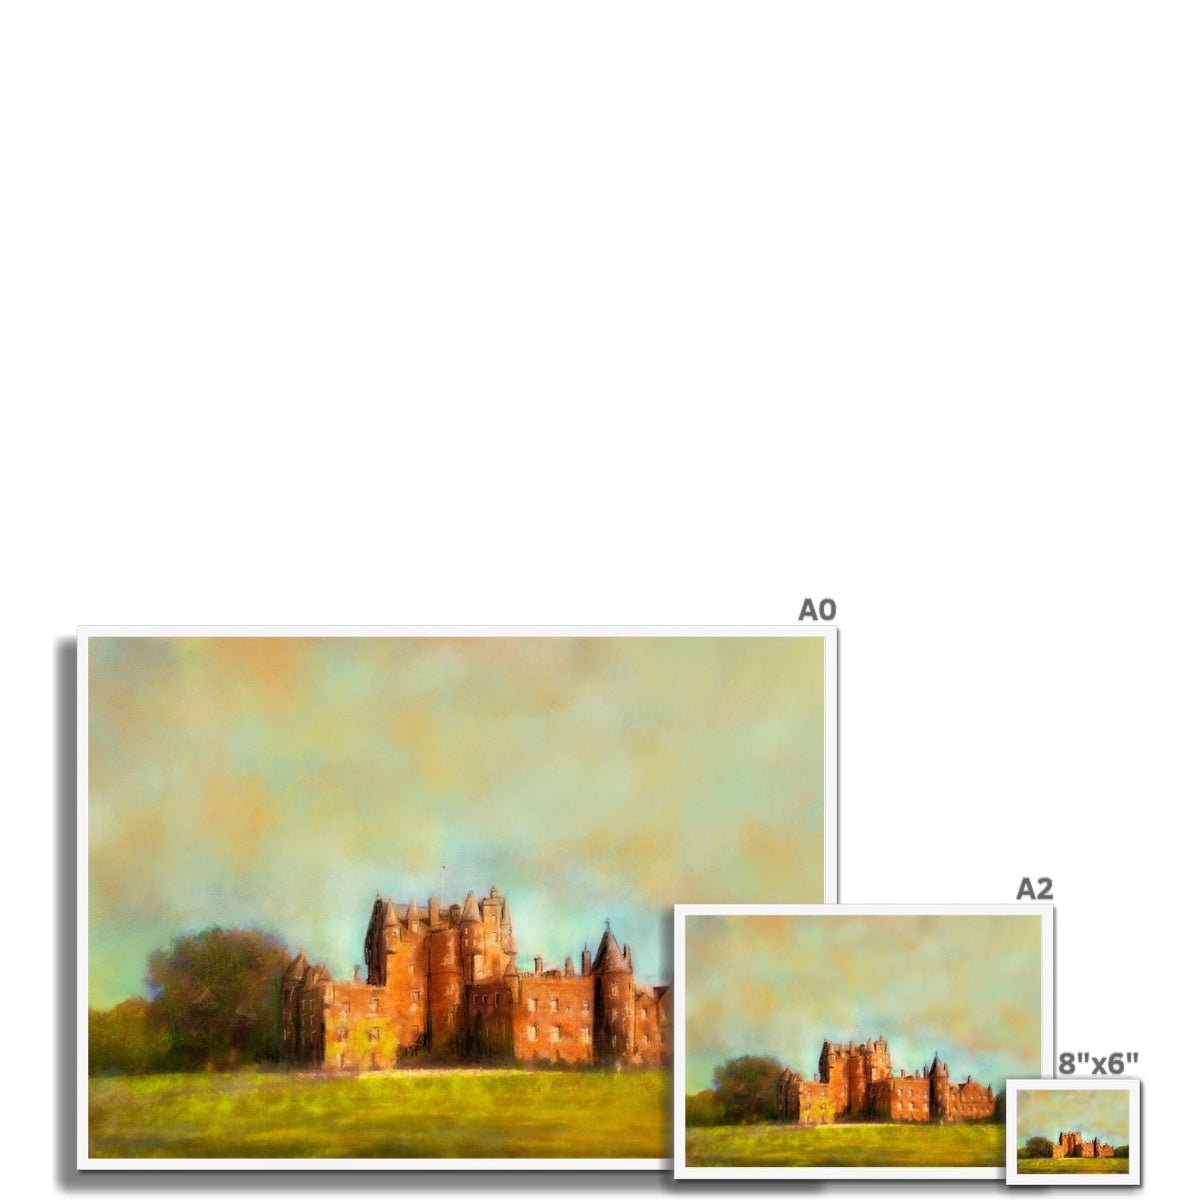 Glamis Castle Painting | Framed Prints From Scotland-Framed Prints-Scottish Castles Art Gallery-Paintings, Prints, Homeware, Art Gifts From Scotland By Scottish Artist Kevin Hunter